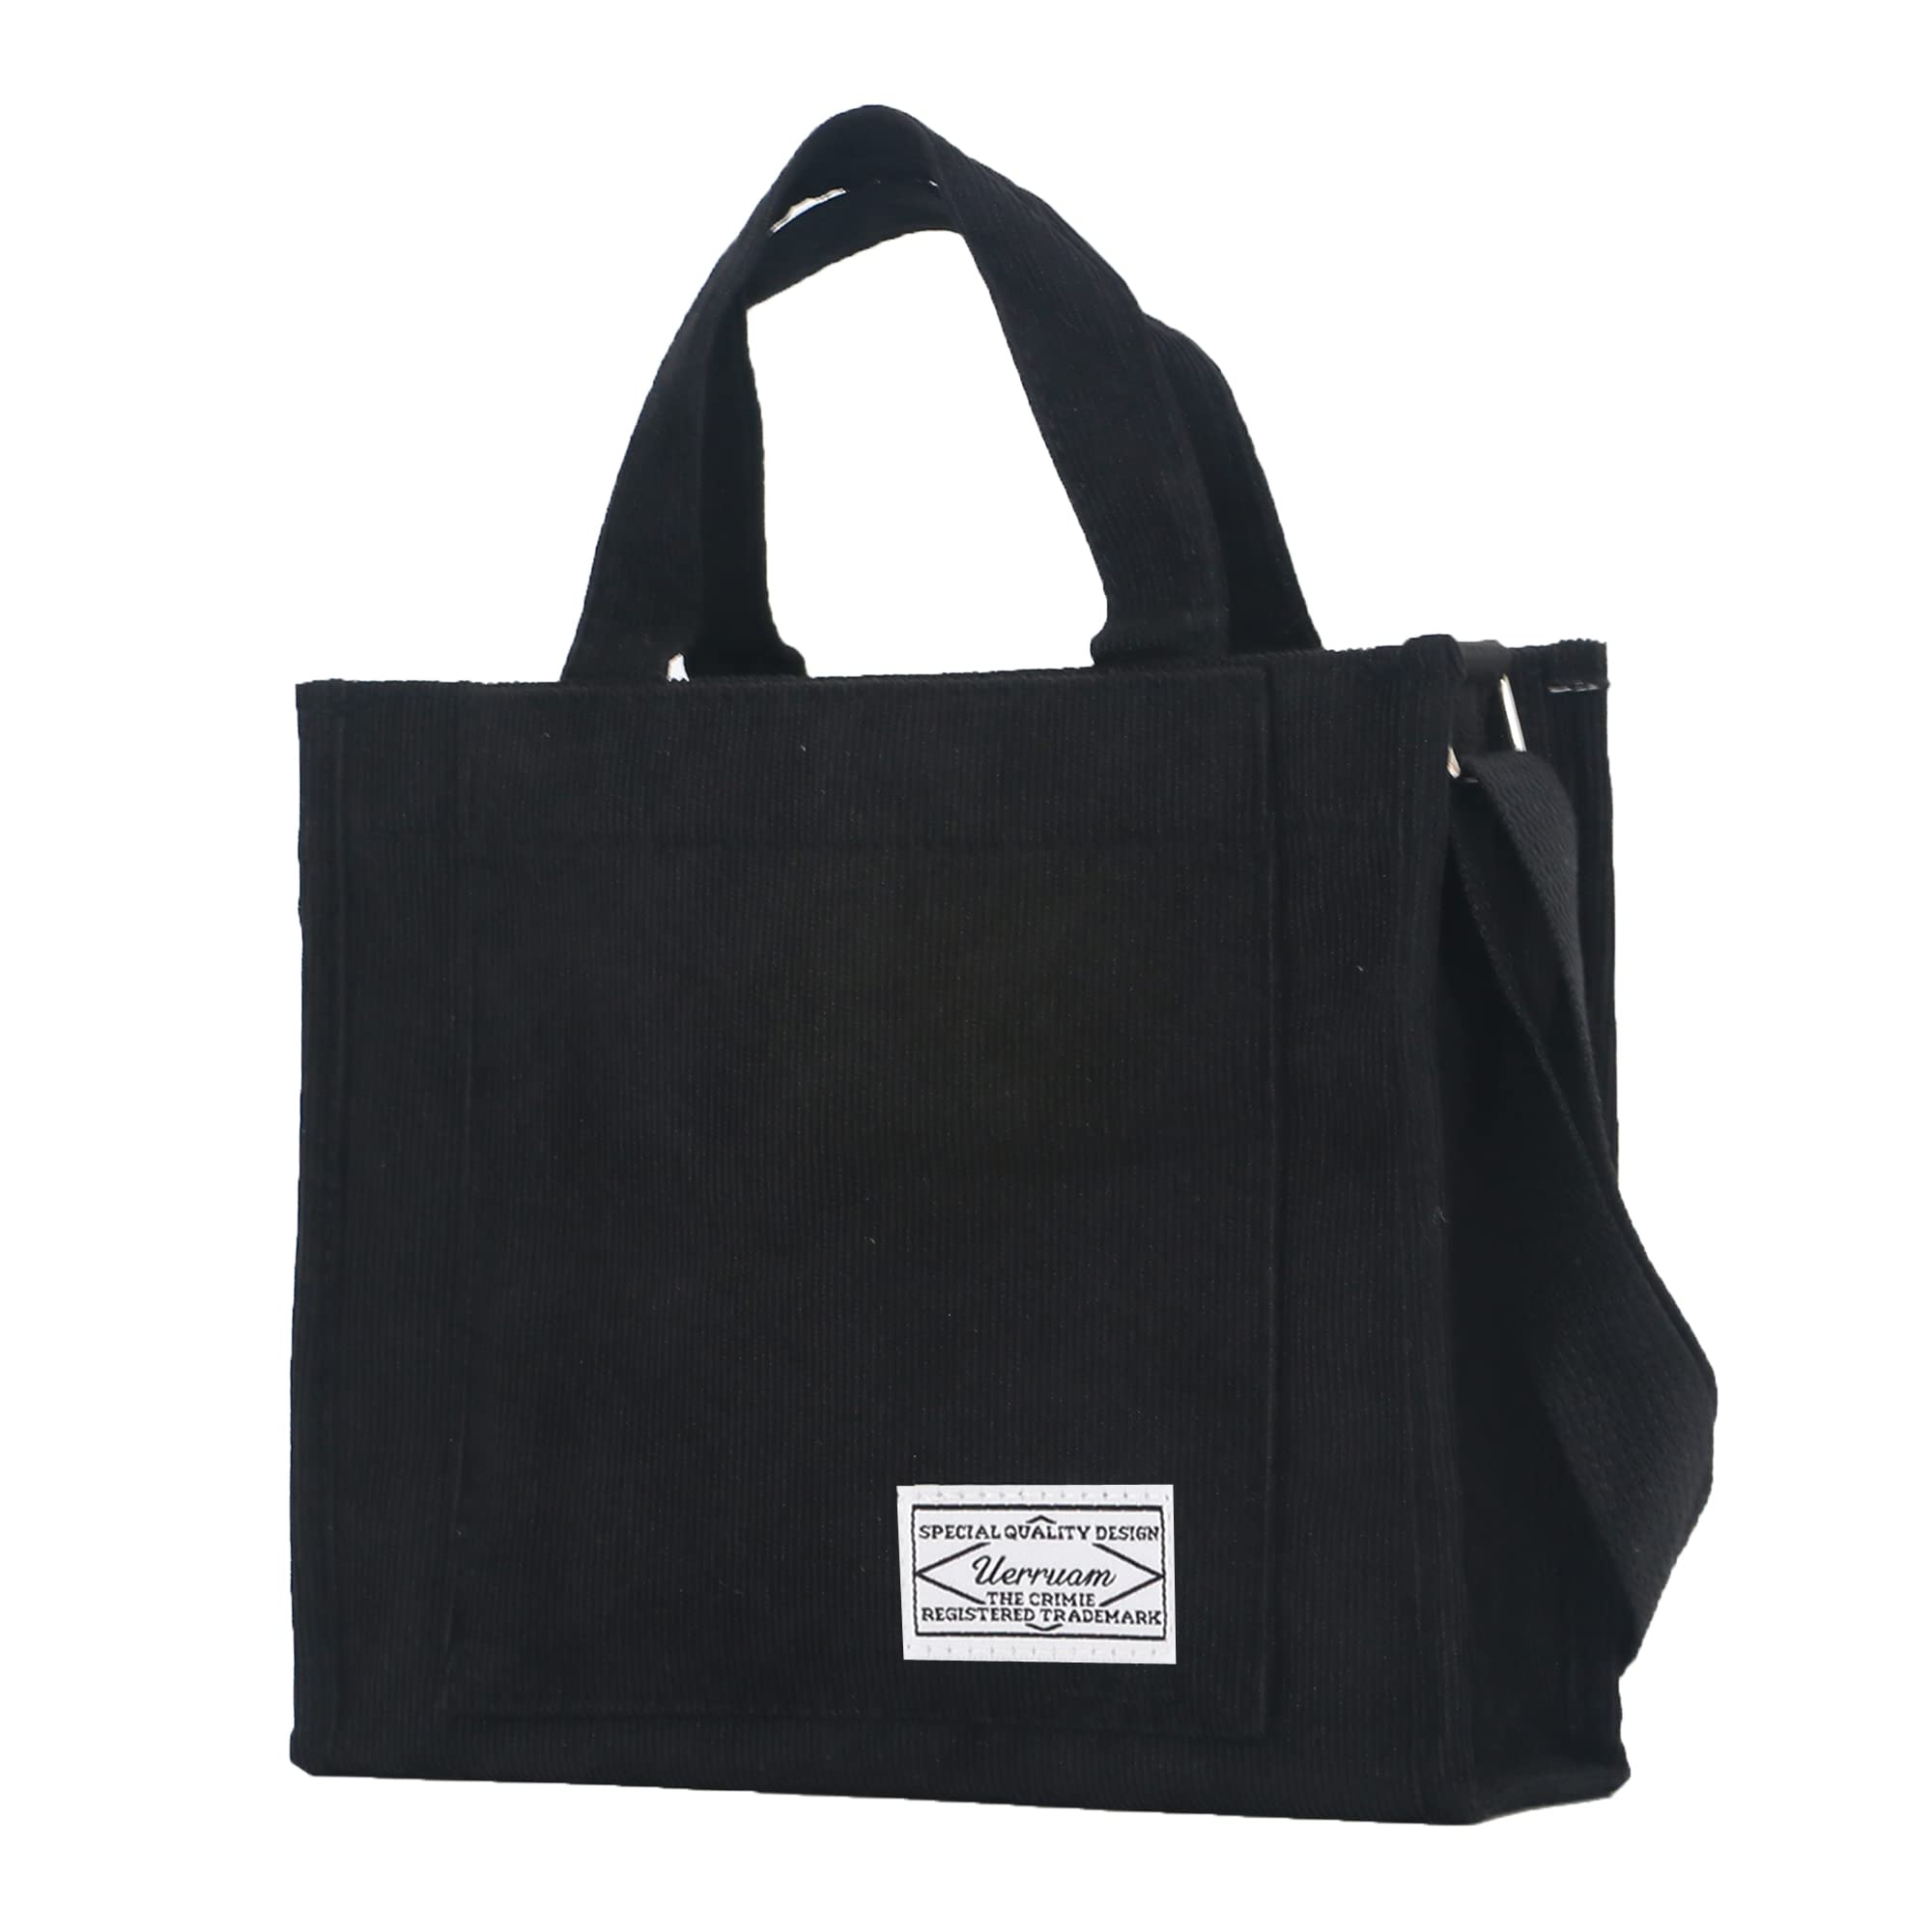 Tote Bag Women Aesthetic Corduroy Bags Cross body Bag Purse for Women Mini Travel Bags Handbags Everyday Bag Square